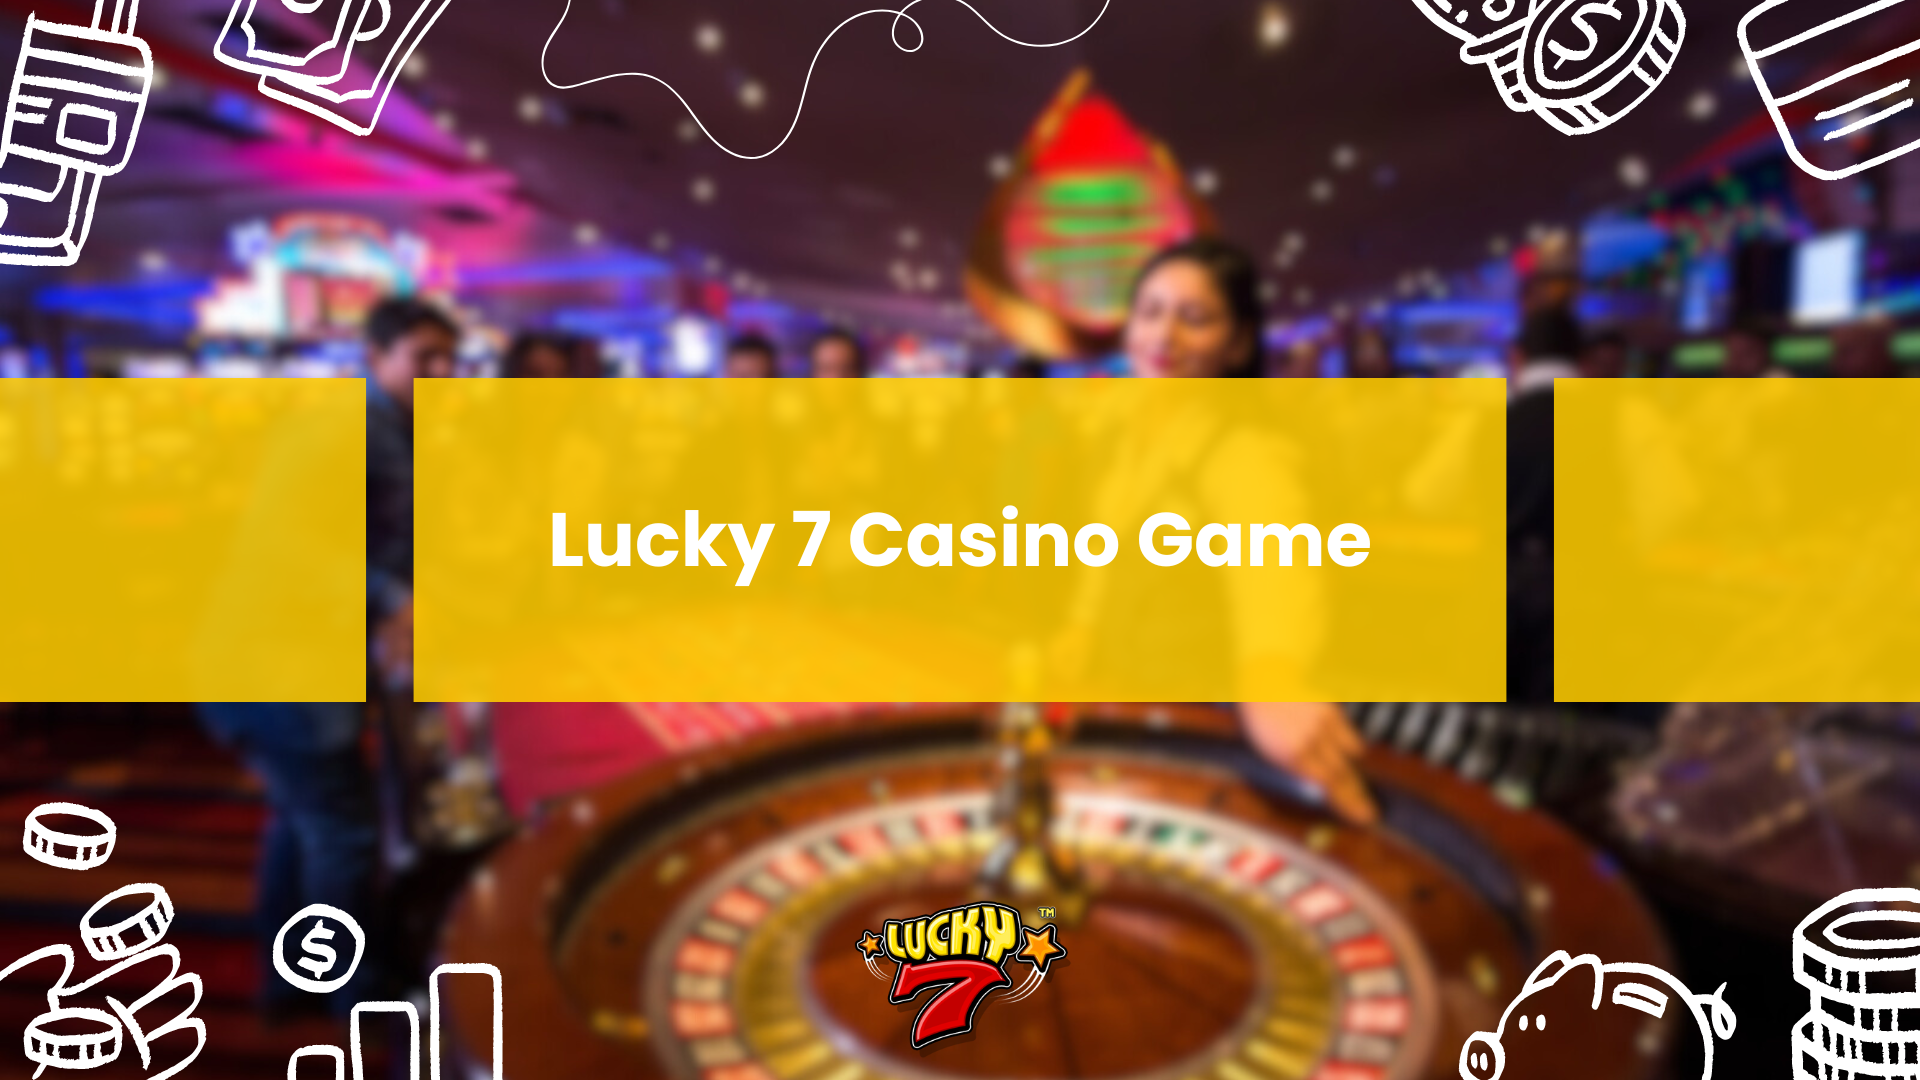 Lucky 7 Casino Game